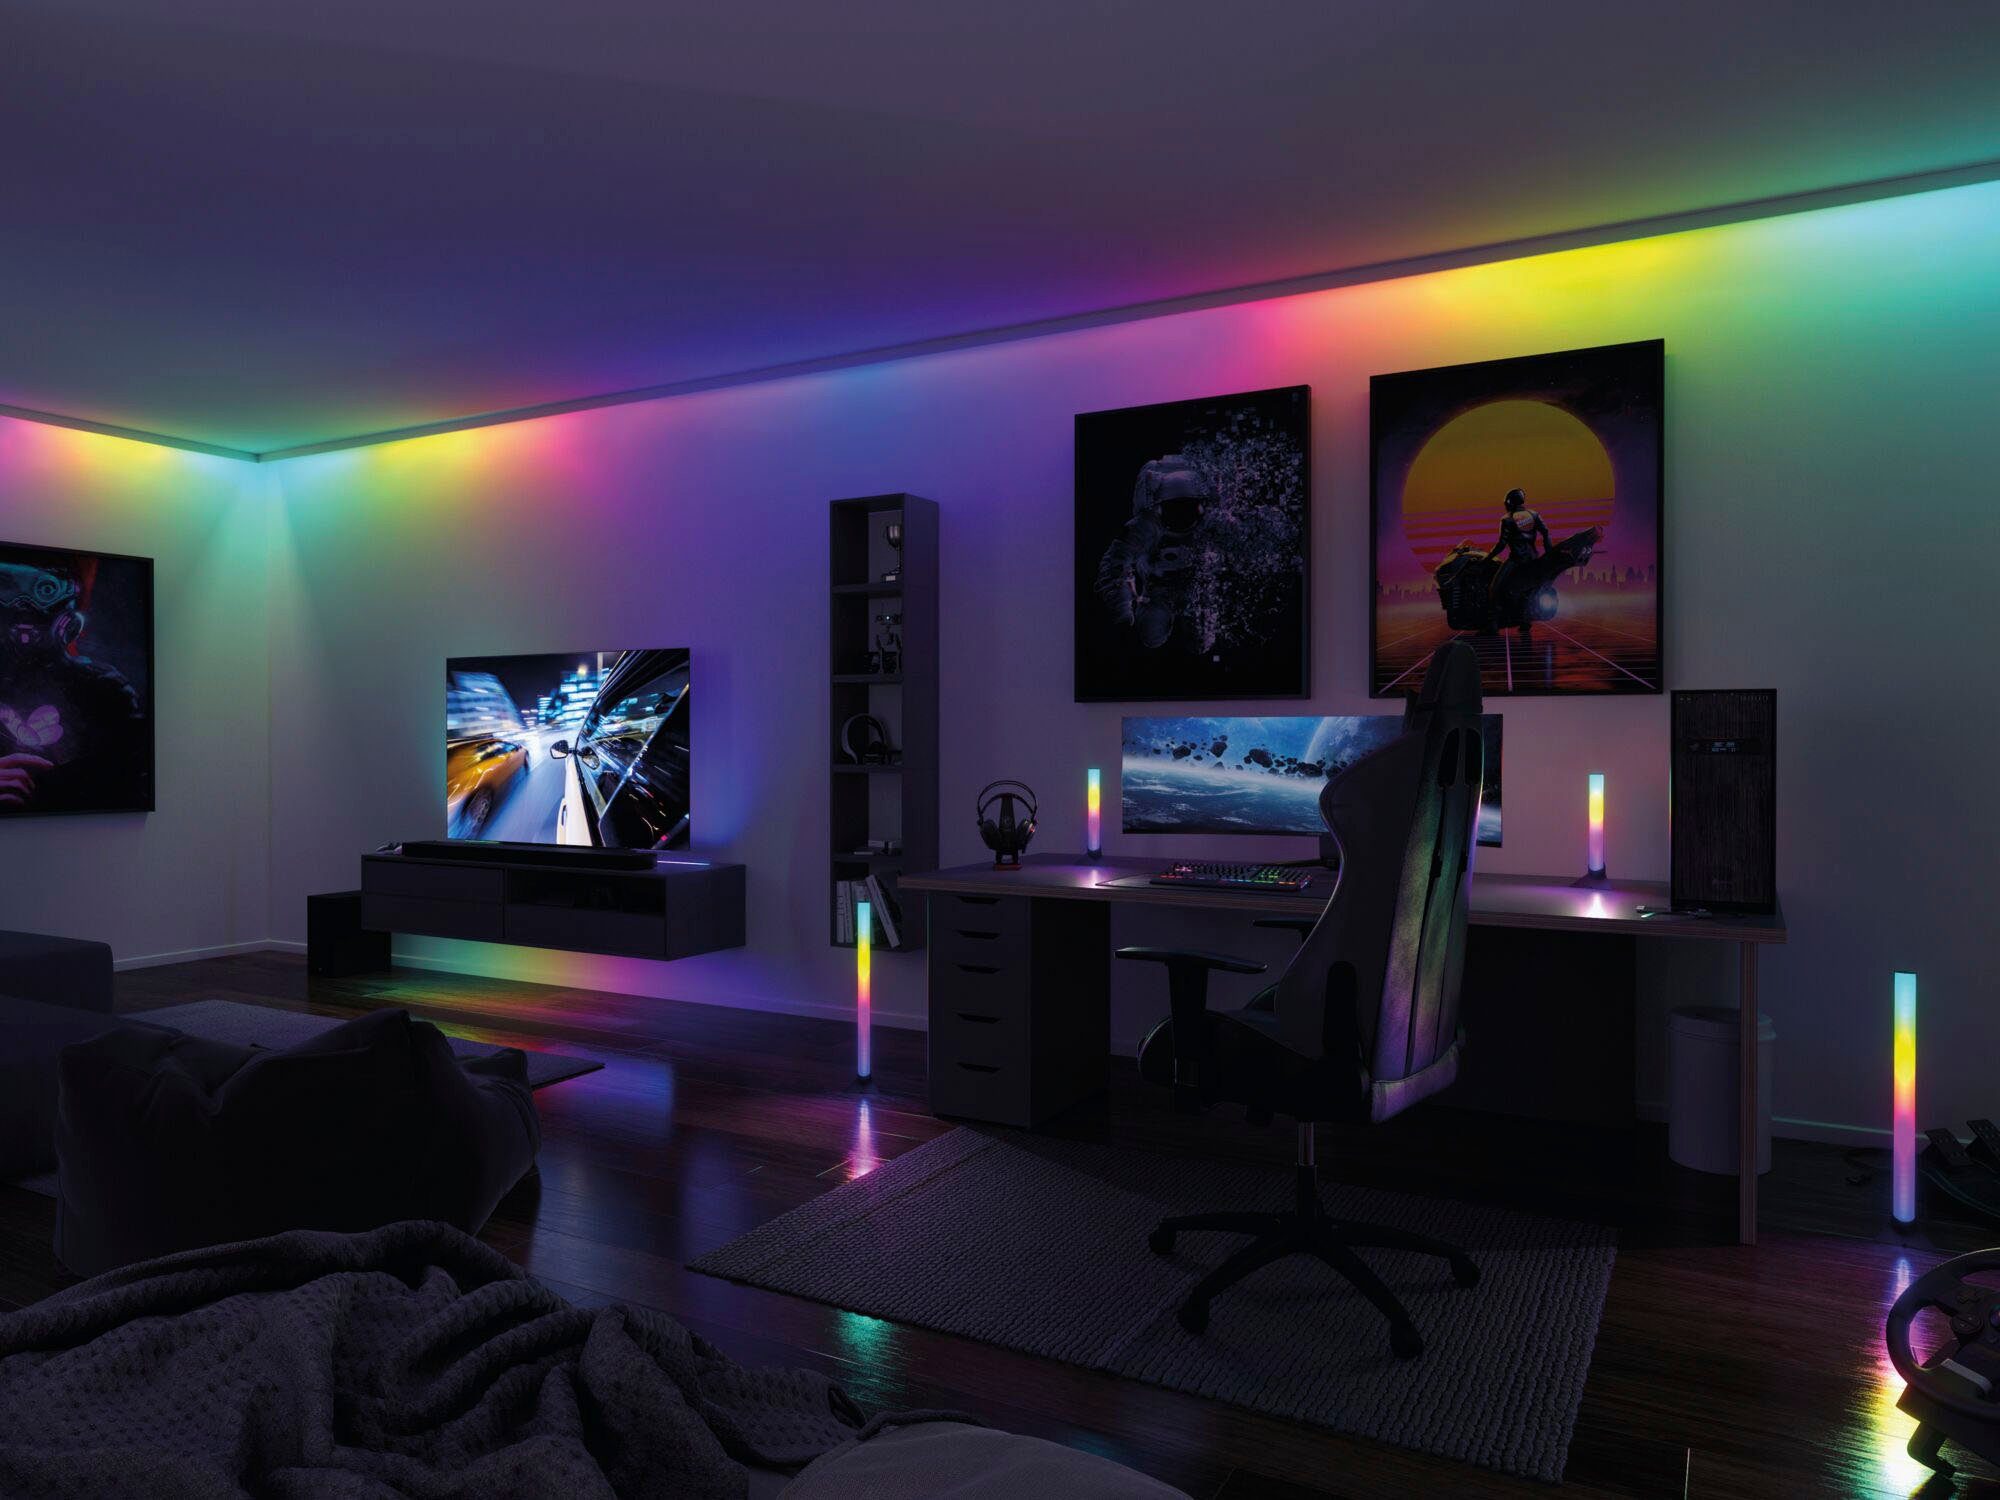 RGB Rainbow EntertainLED 2-flammig 30x30mm Dynamic LED-Streifen Paulmann Lightbar 2x24lm, 2x0,6W